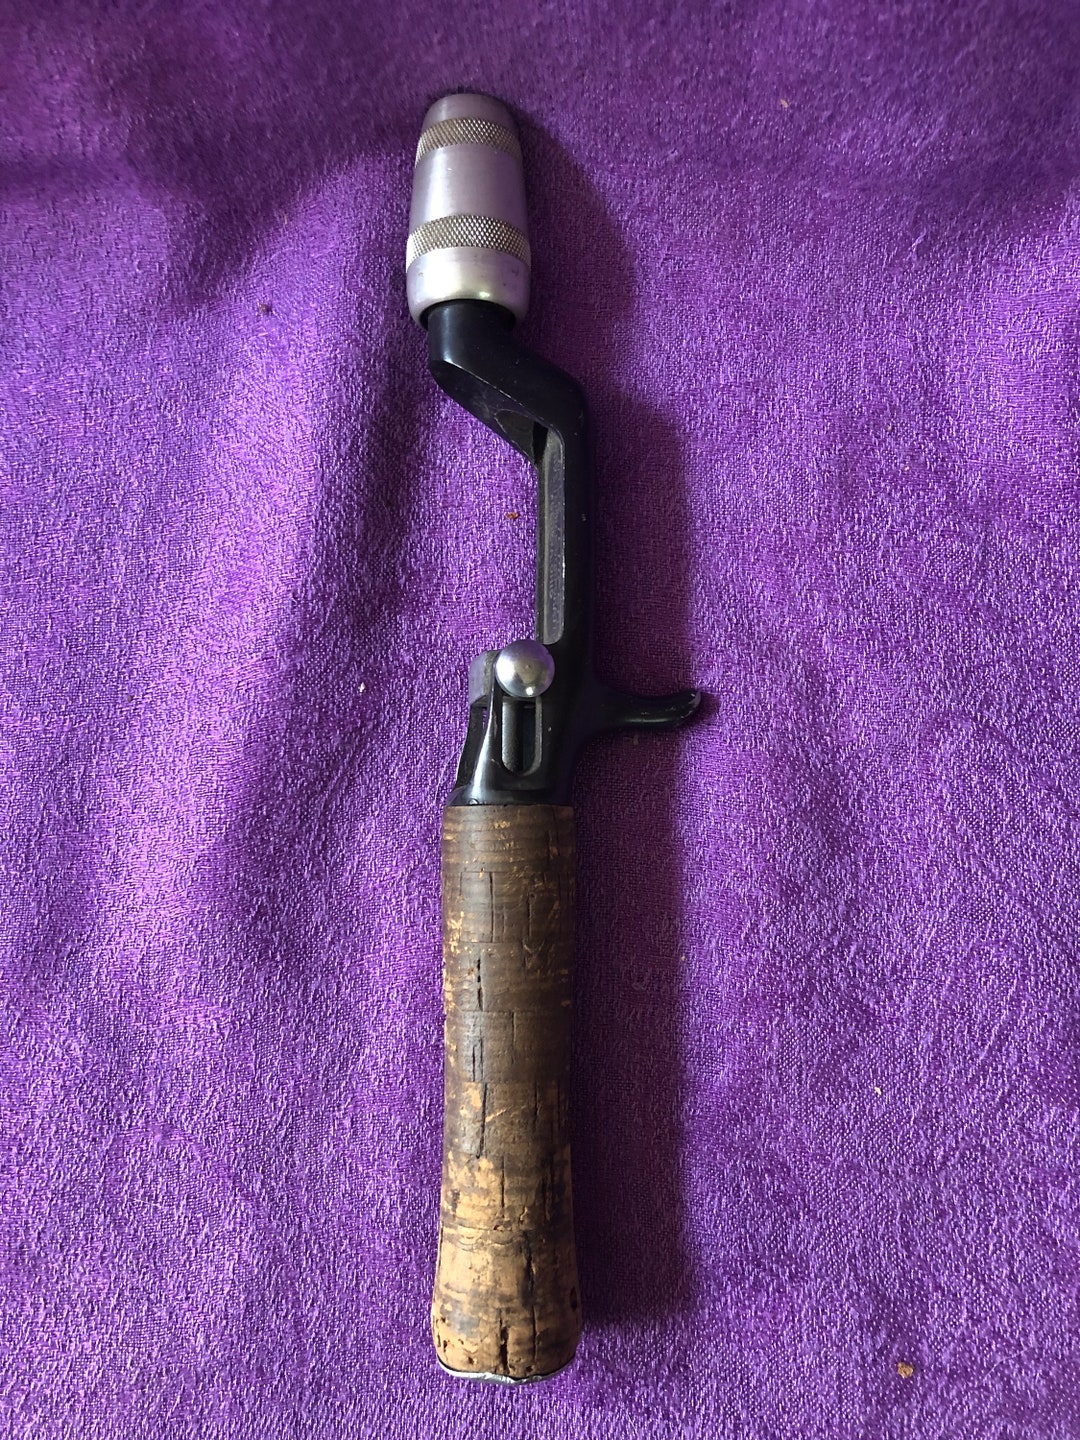 Vintage Replacement Speedlock Fishing Pole Handle, Pat No 2102237